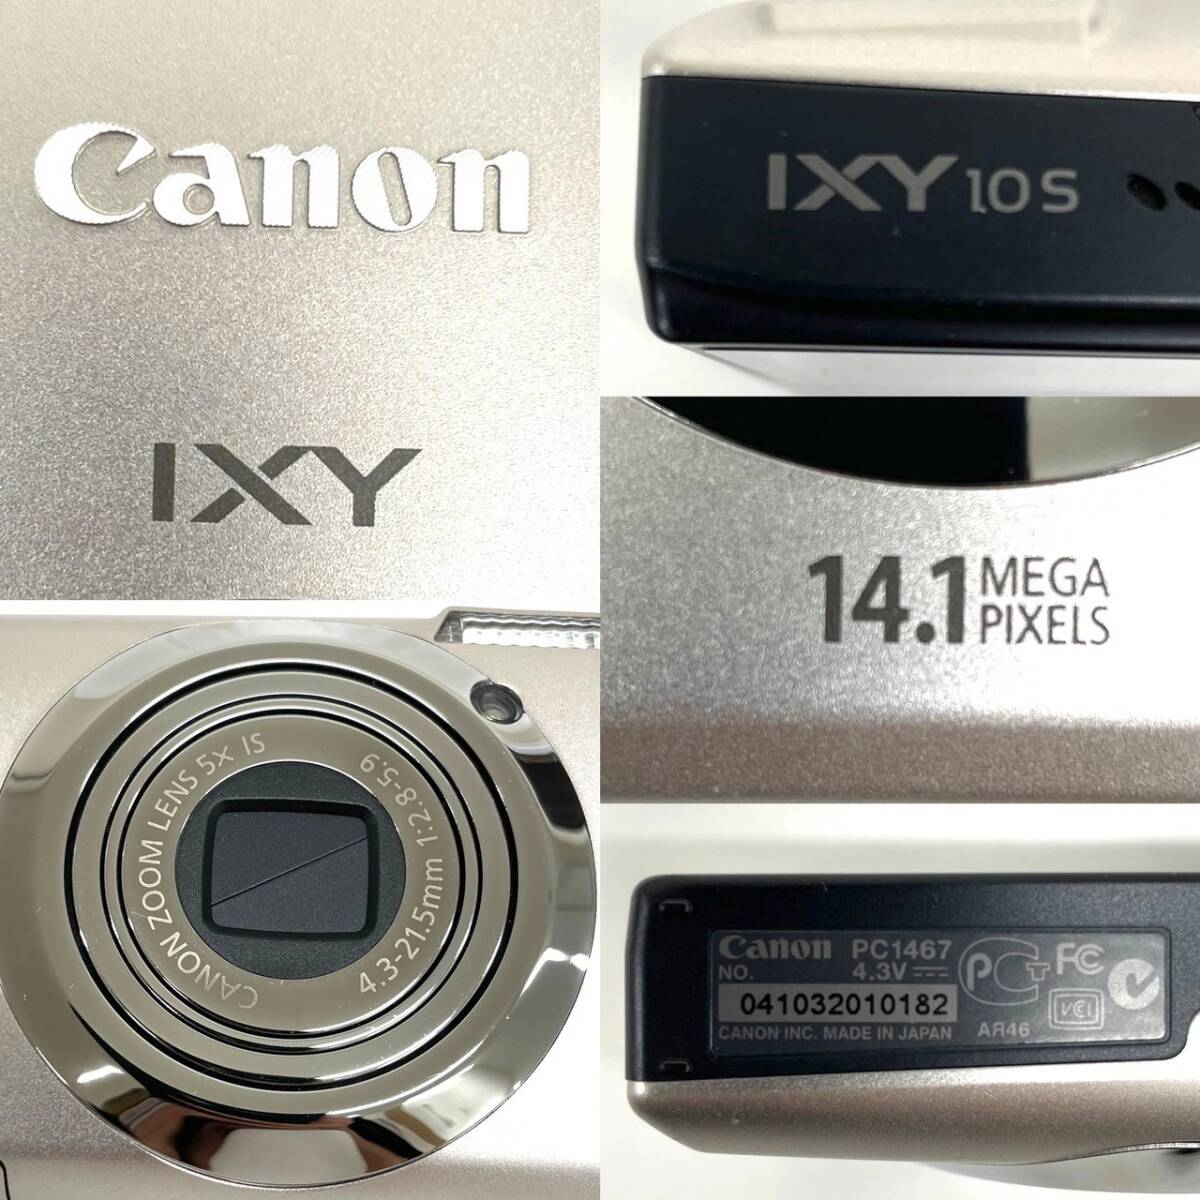 D6840*10 美品 Canon キャノン デジカメ IXY 10S PC1467 14.1MEGA PIXELS/ZOOM LENS 5x IS 4.3-21.5mm 1:2.8-5.9 ケース付きの画像7